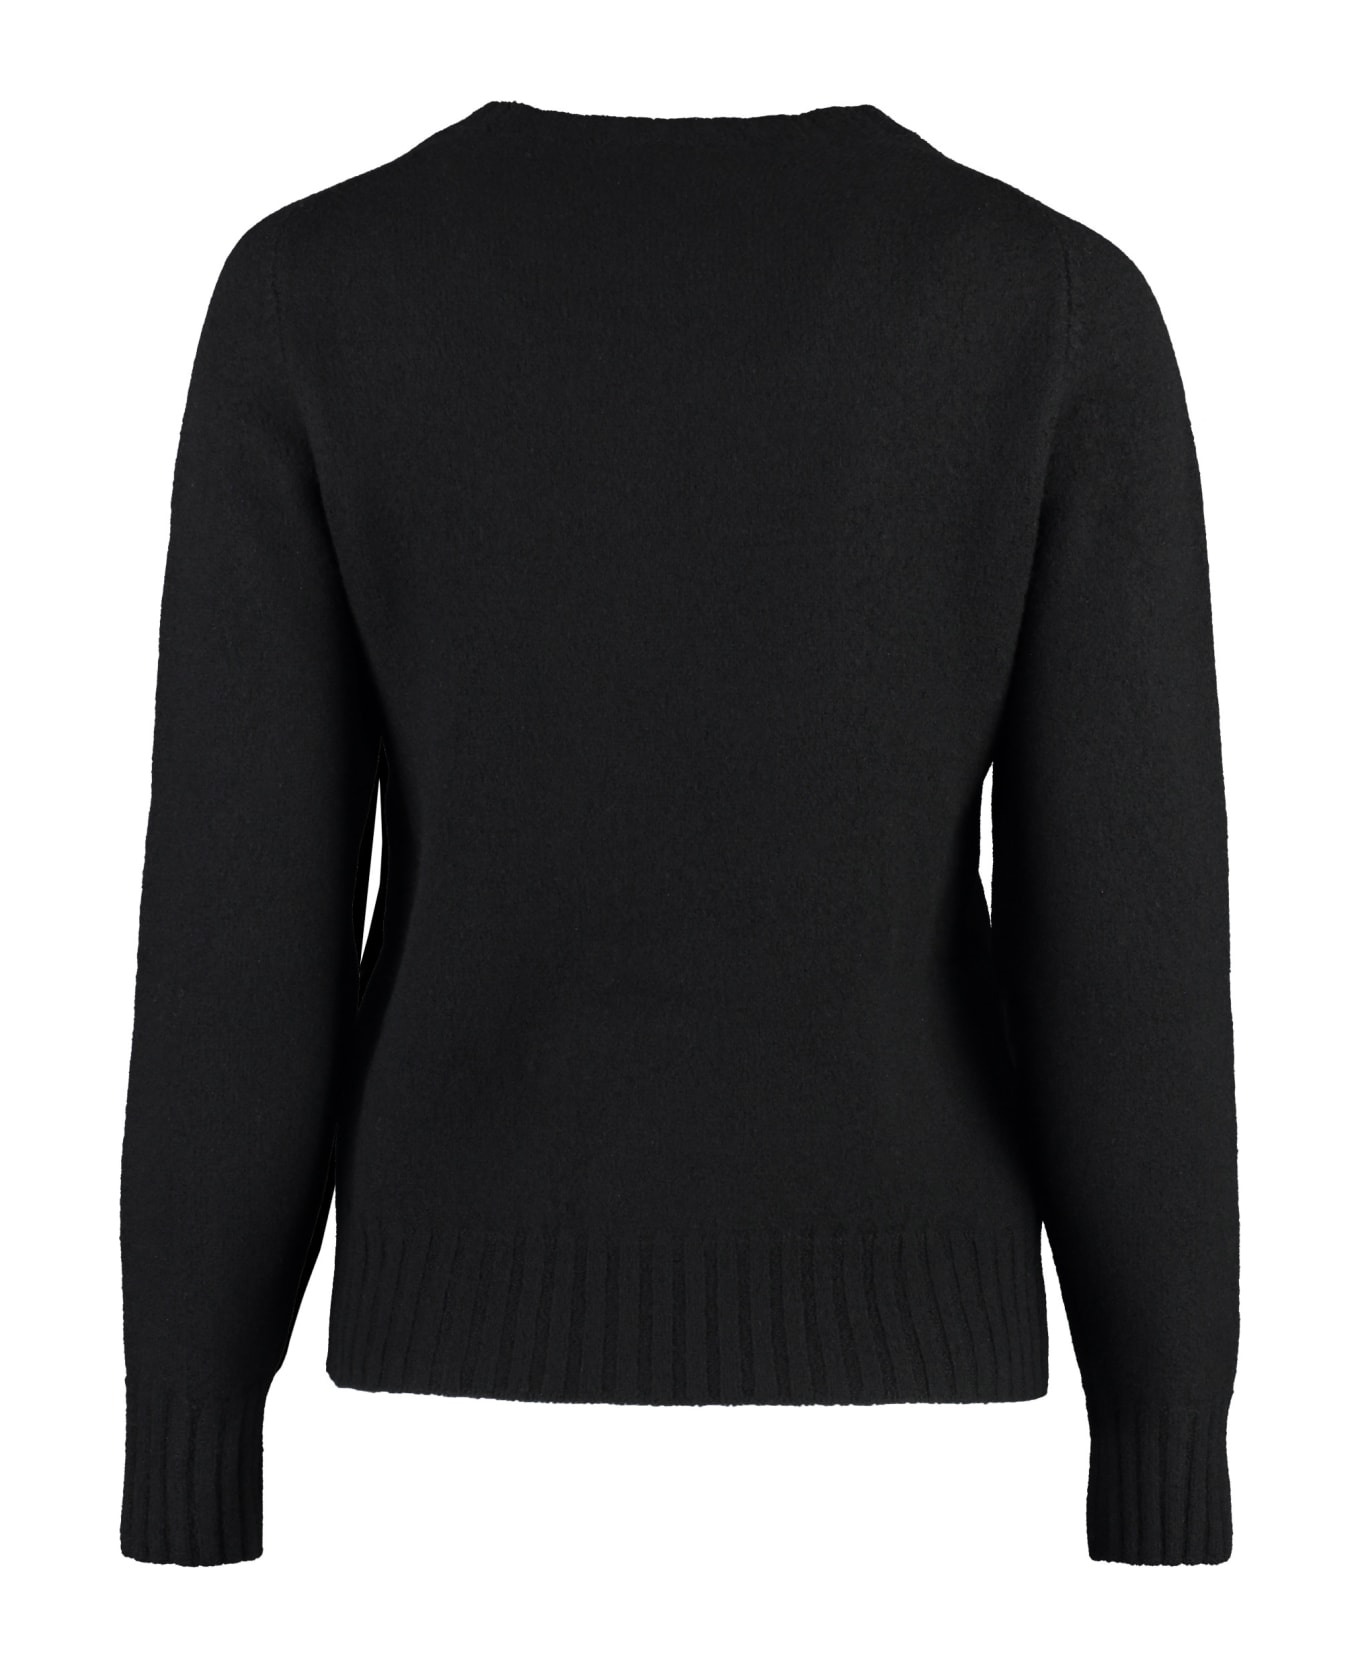 Jil Sander Crew-neck Wool Sweater - black